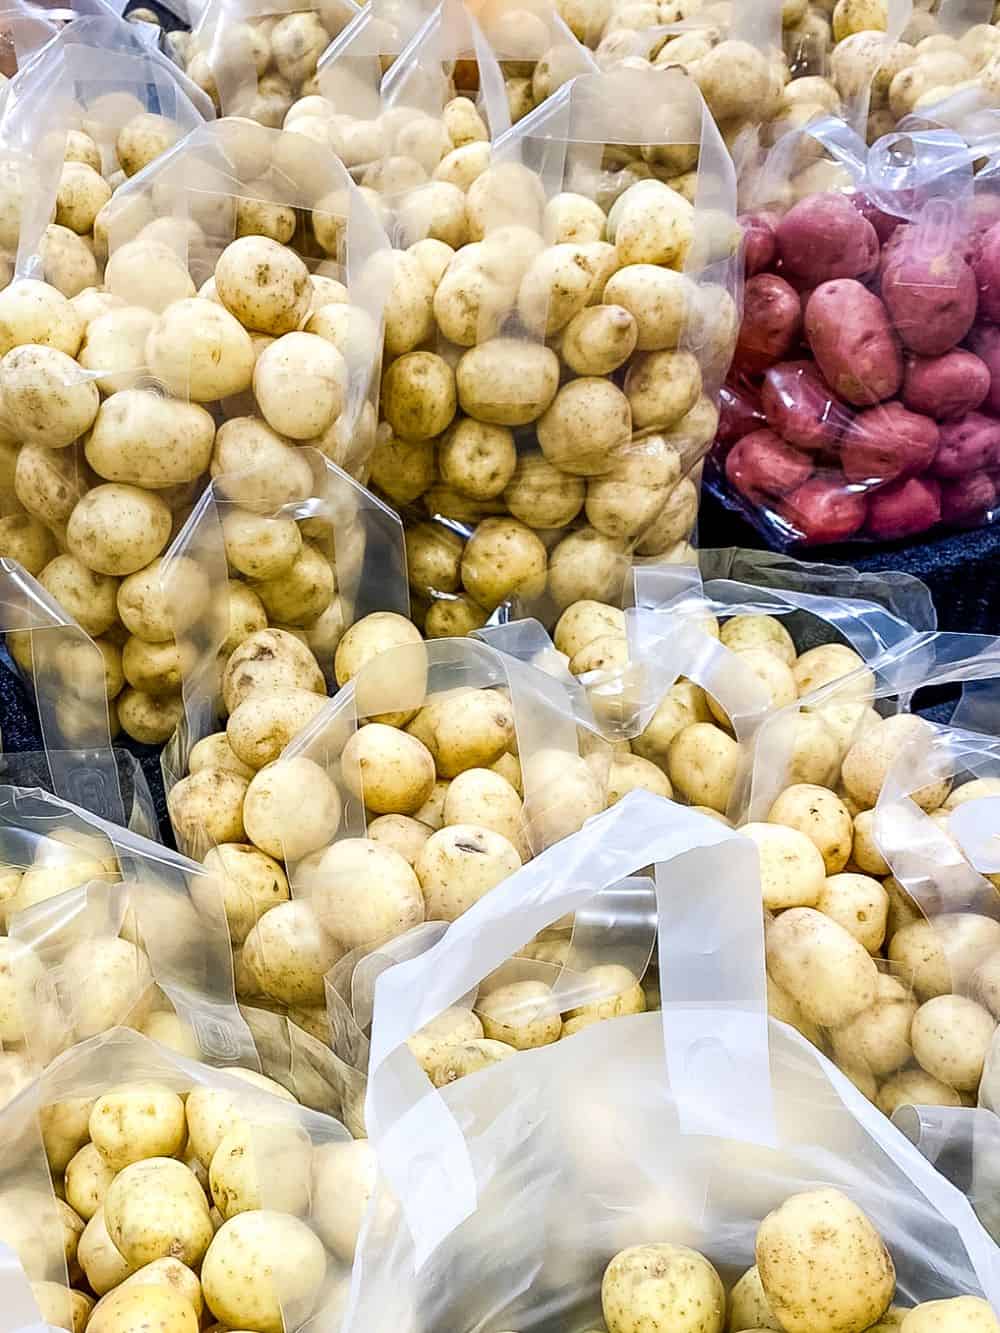 Bags of potatoes at supermarket.